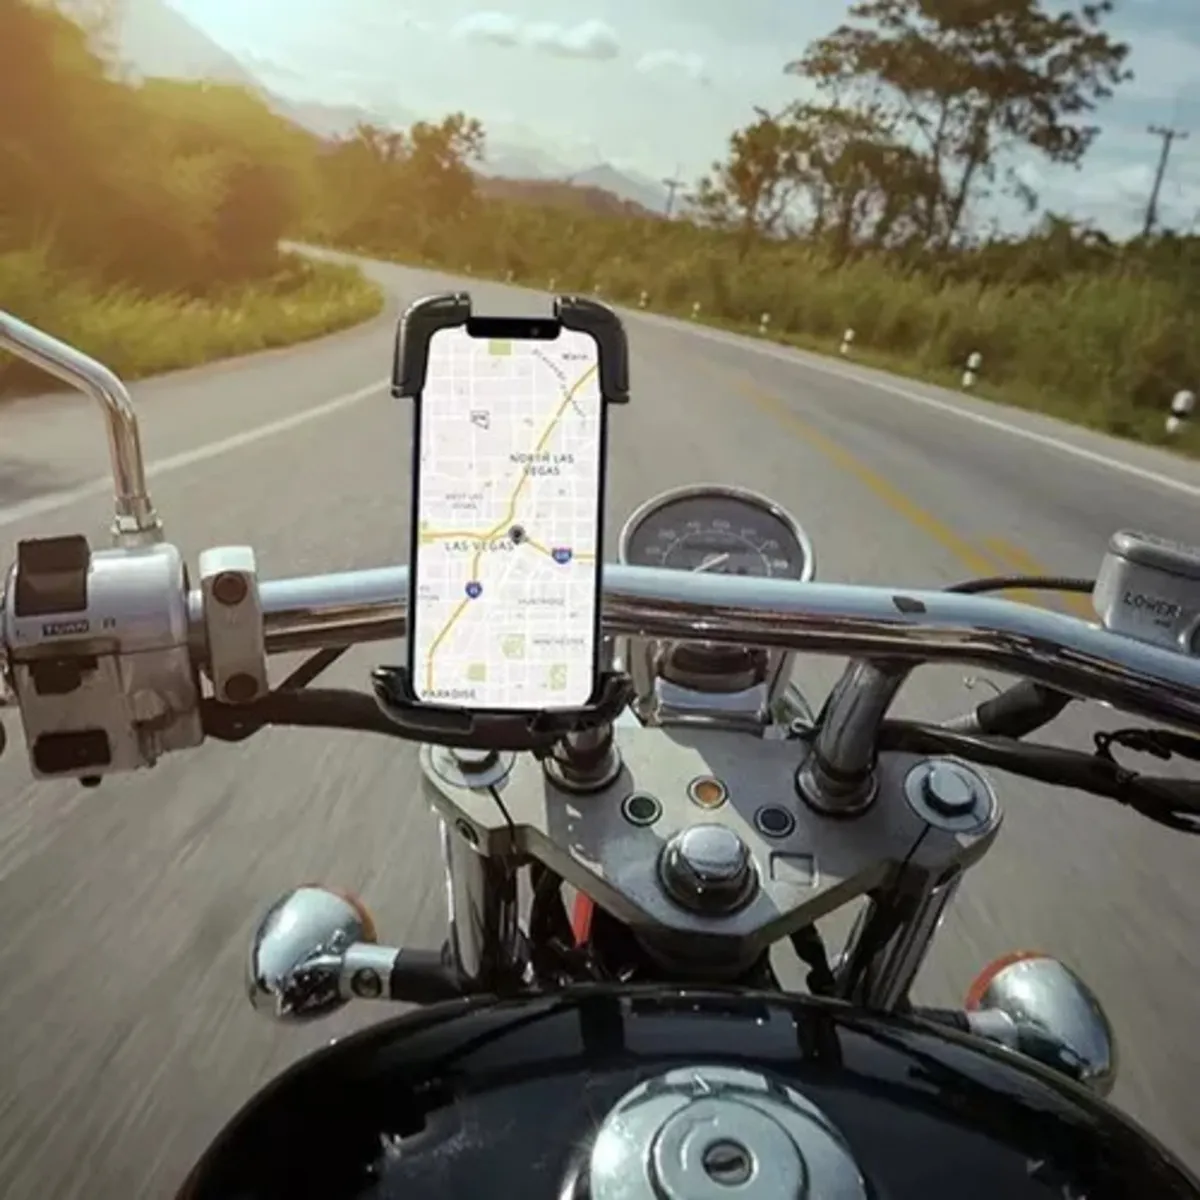 Soporte Universal Para Celular Moto Espejo Holder 360° Gps